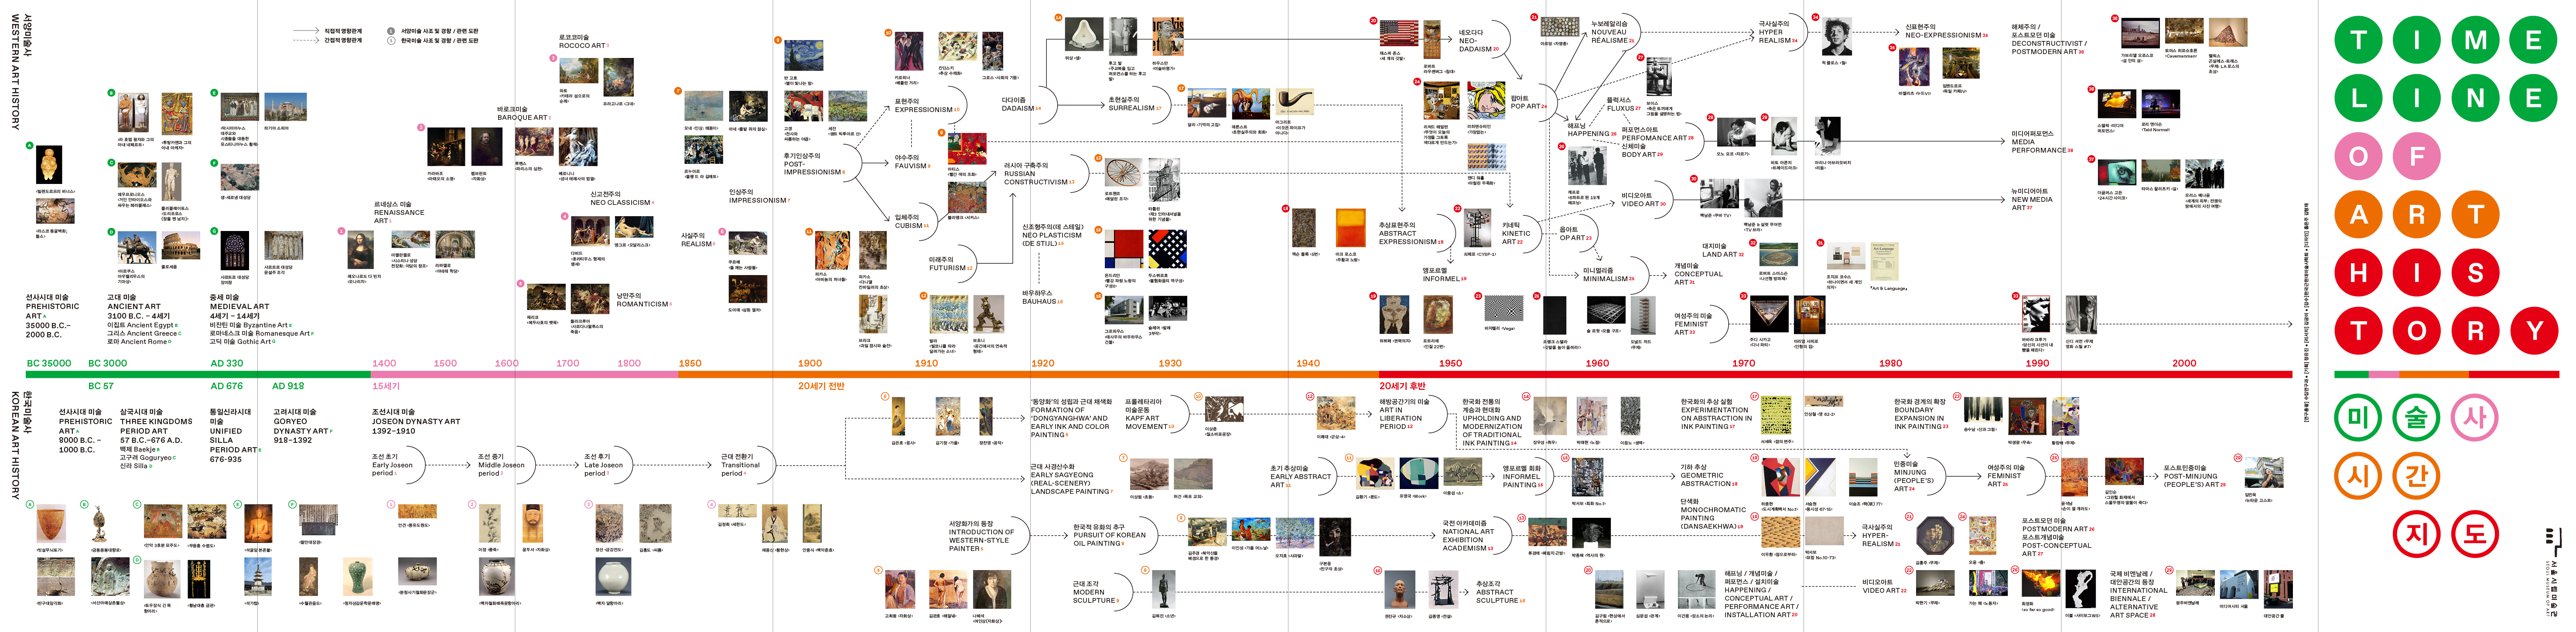 World art history timeline